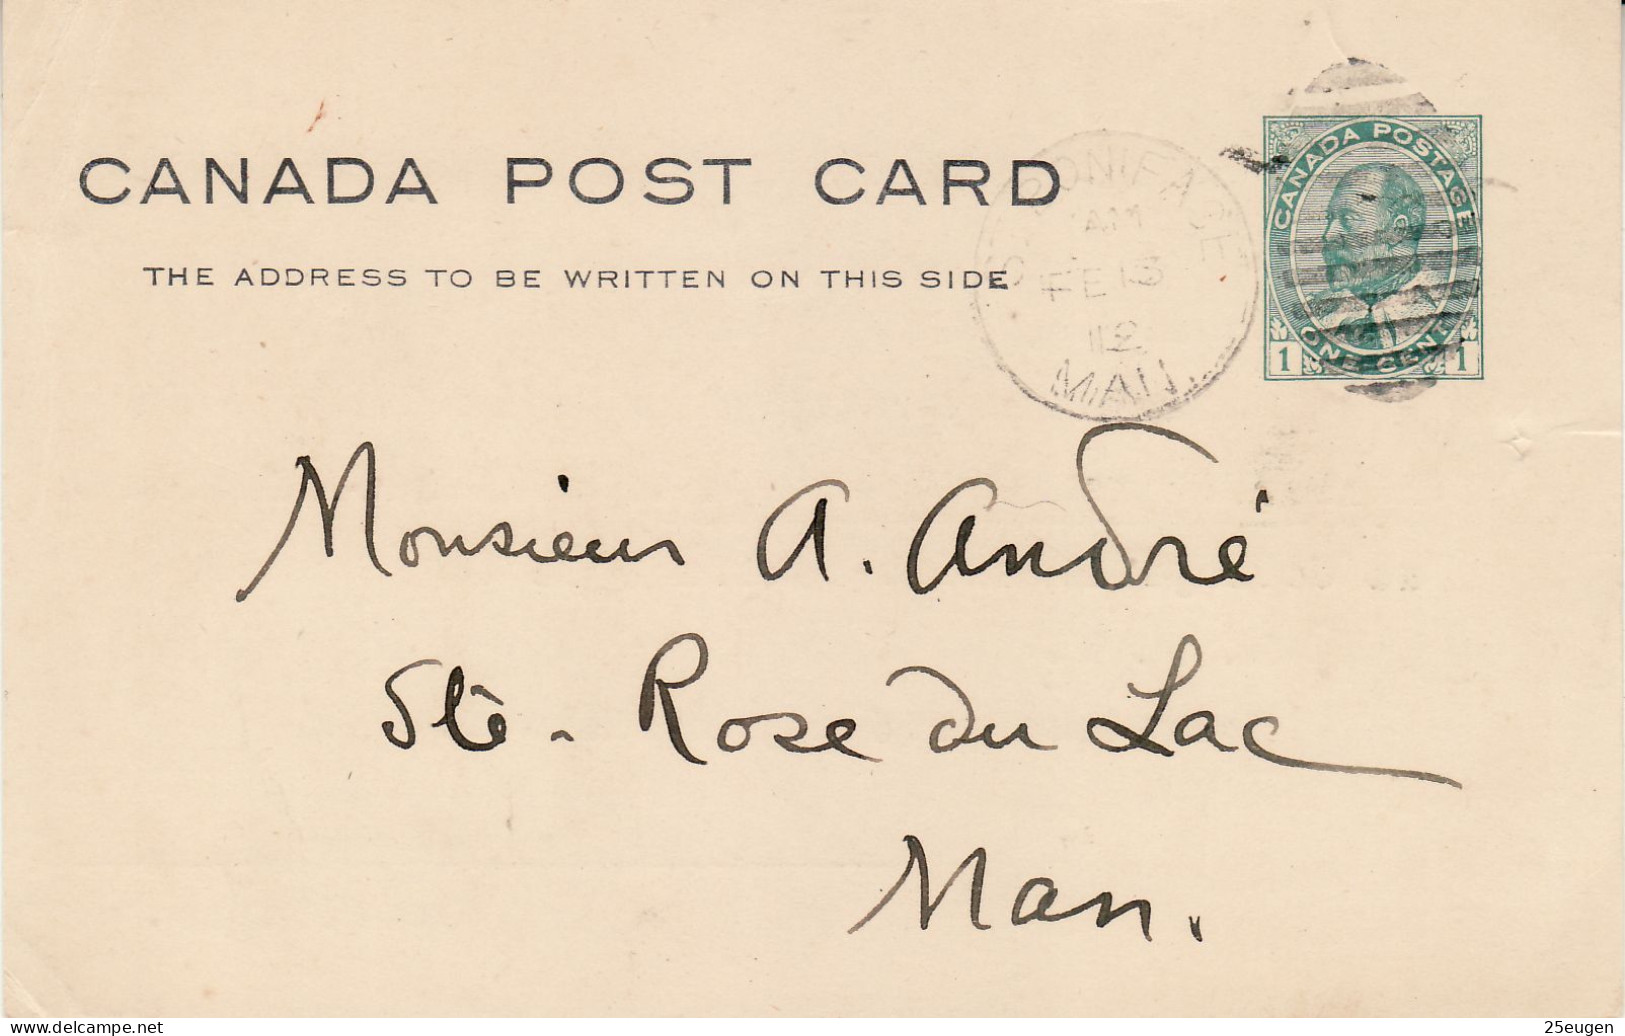 CANADA 1912  POSTCARD  SENT FROM SAINT-BONIFACE - Lettres & Documents